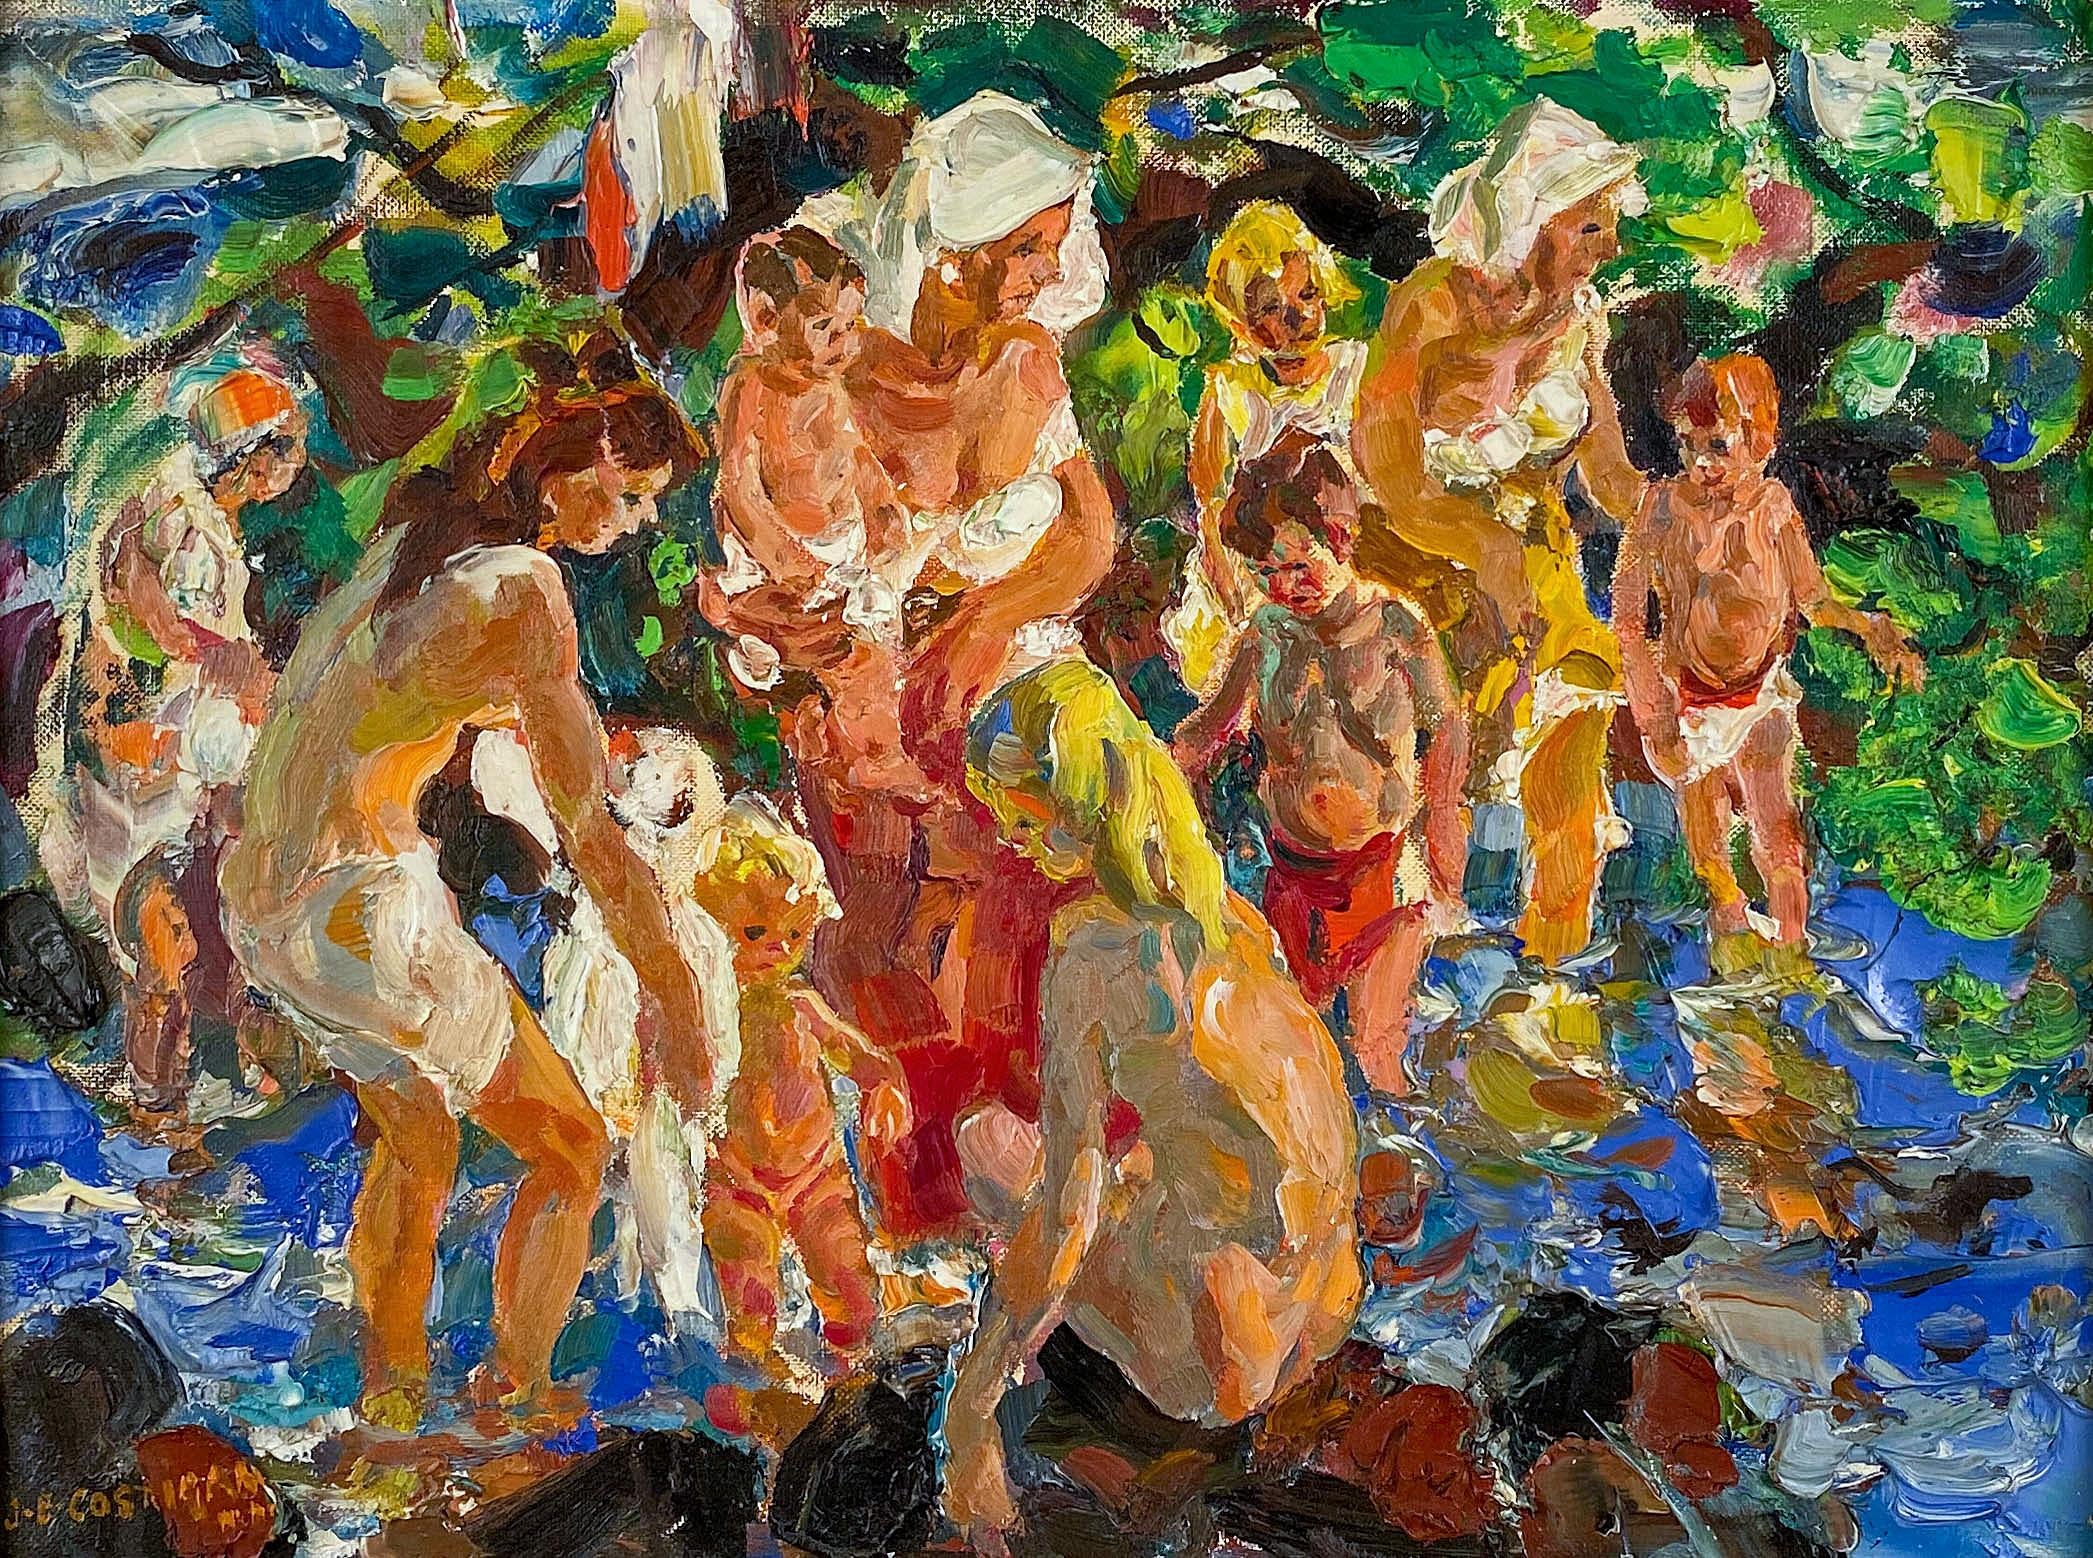 Groupe de bains - Painting de John Edward Costigan